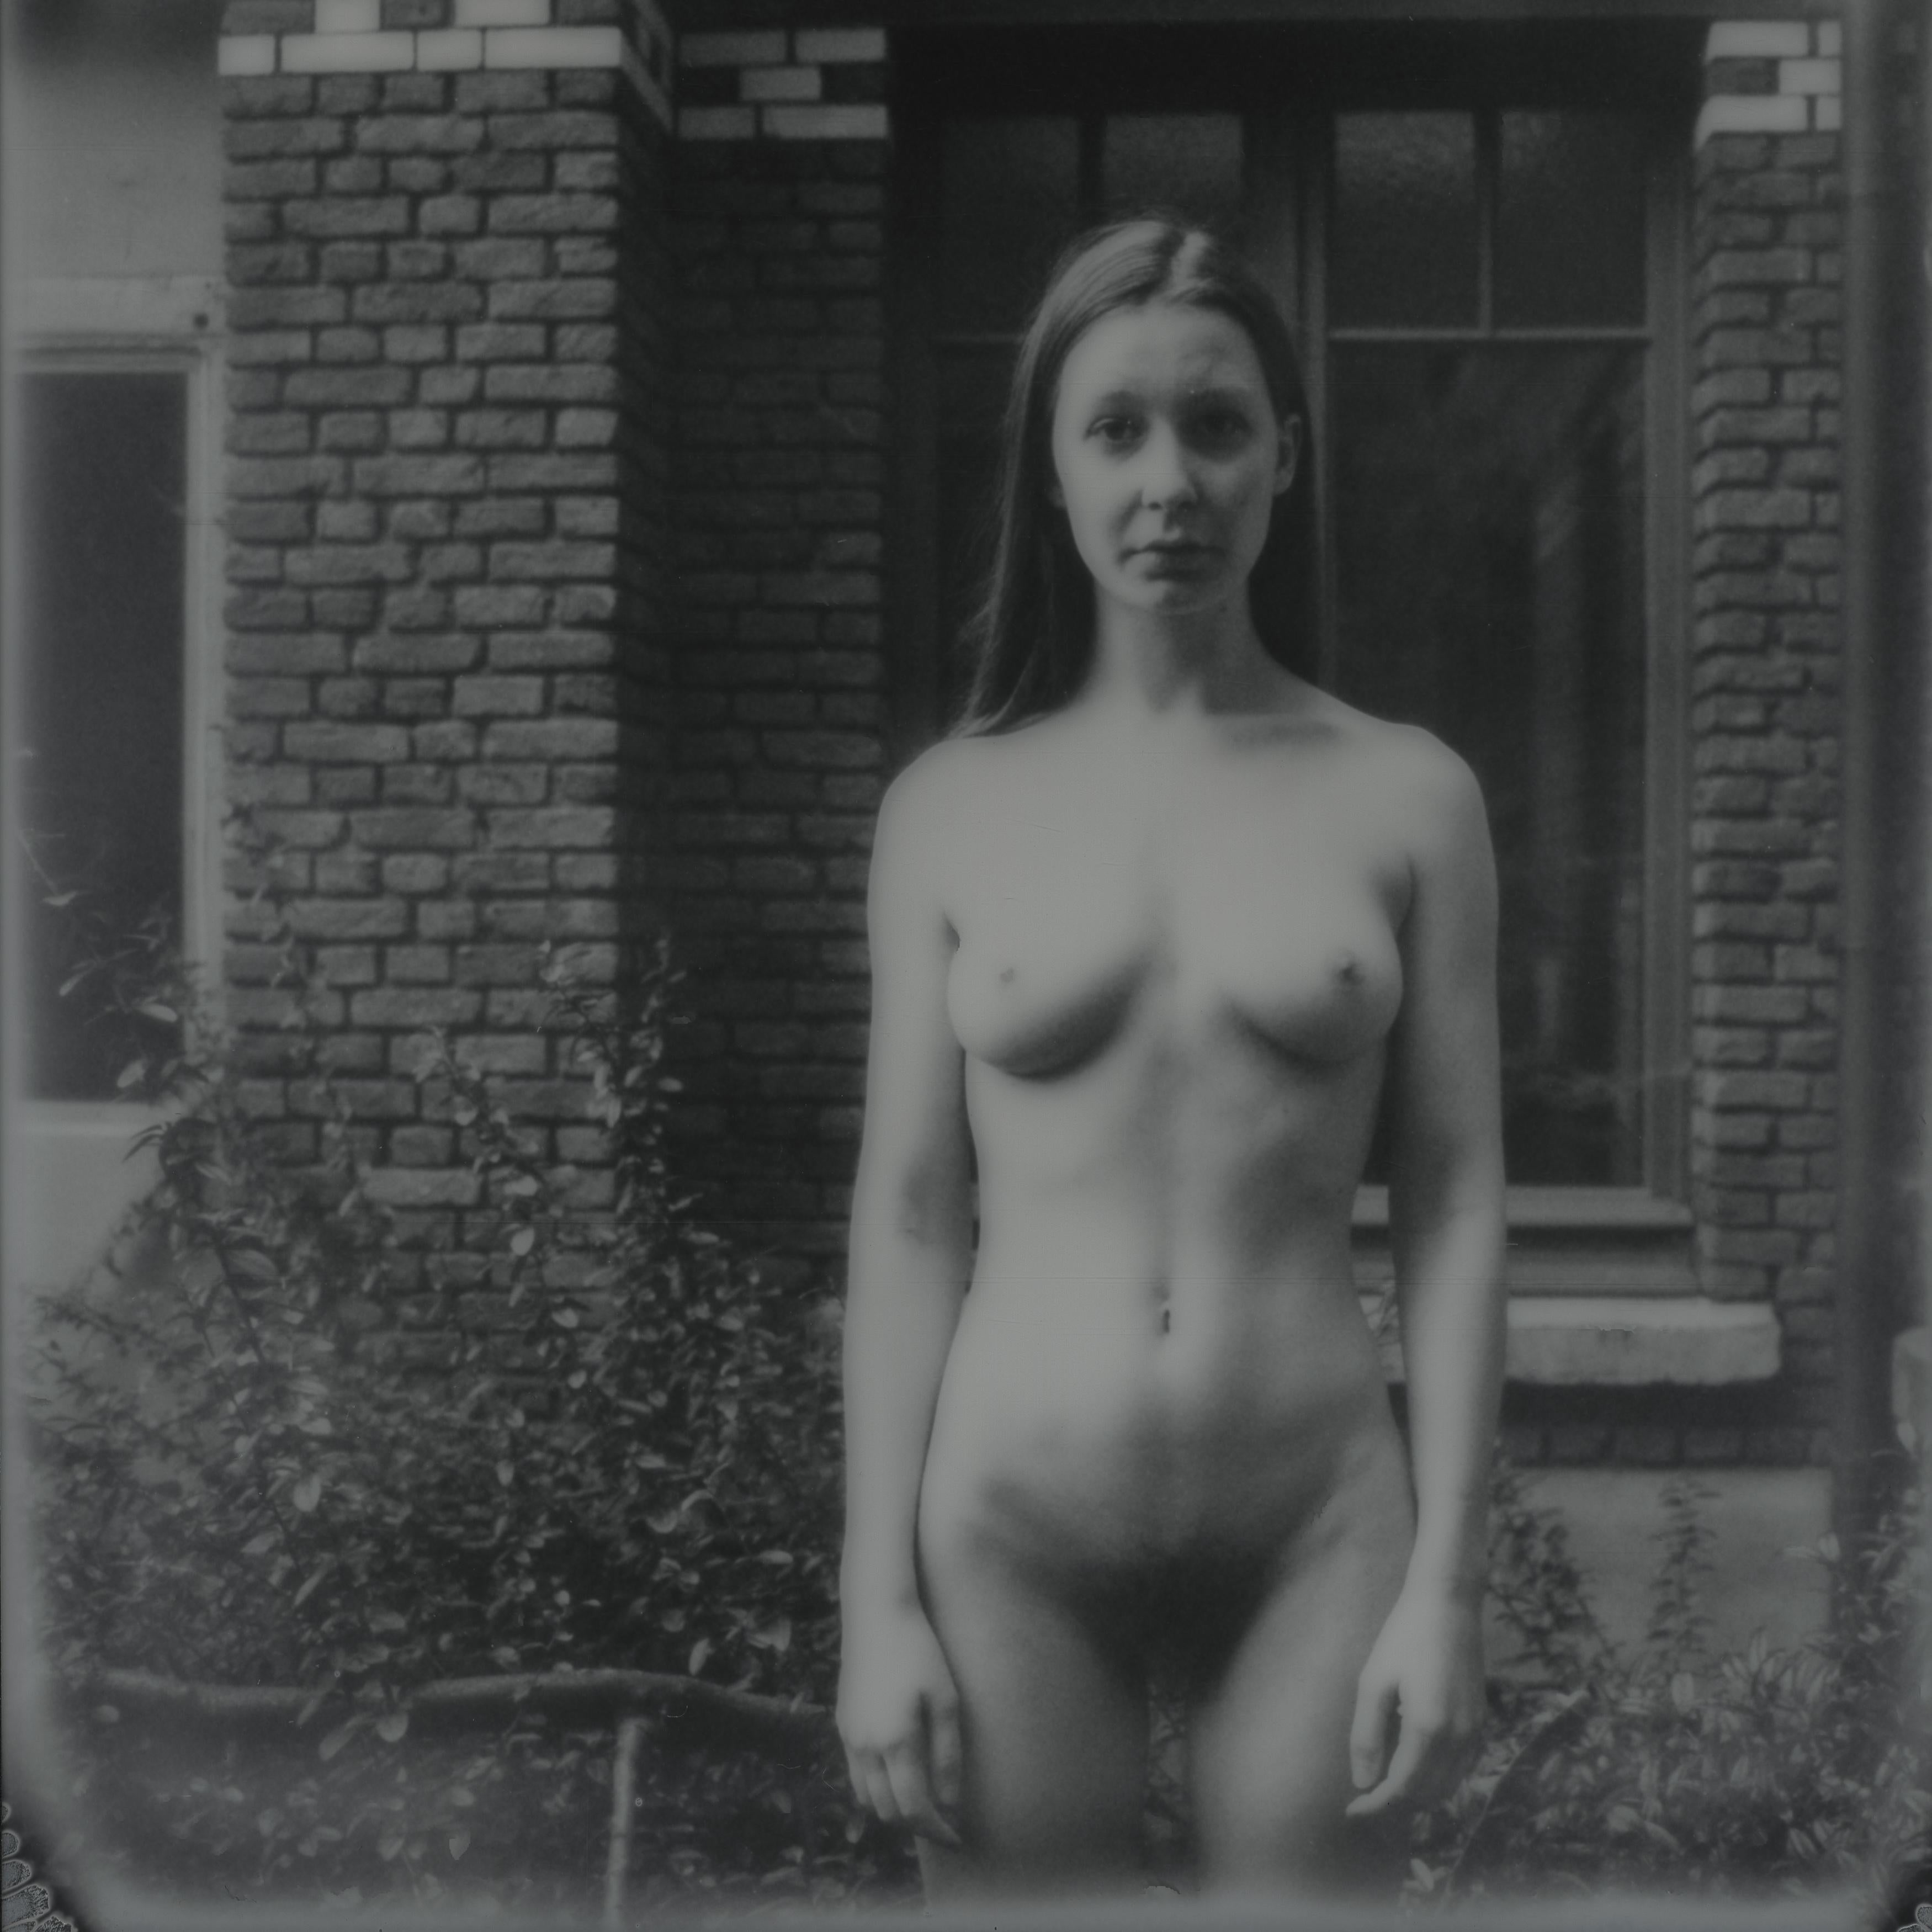 Kirsten Thys van den Audenaerde Black and White Photograph - I'm only happy when it rains - Contemporary, Nude, Women, Polaroid, 21st Century